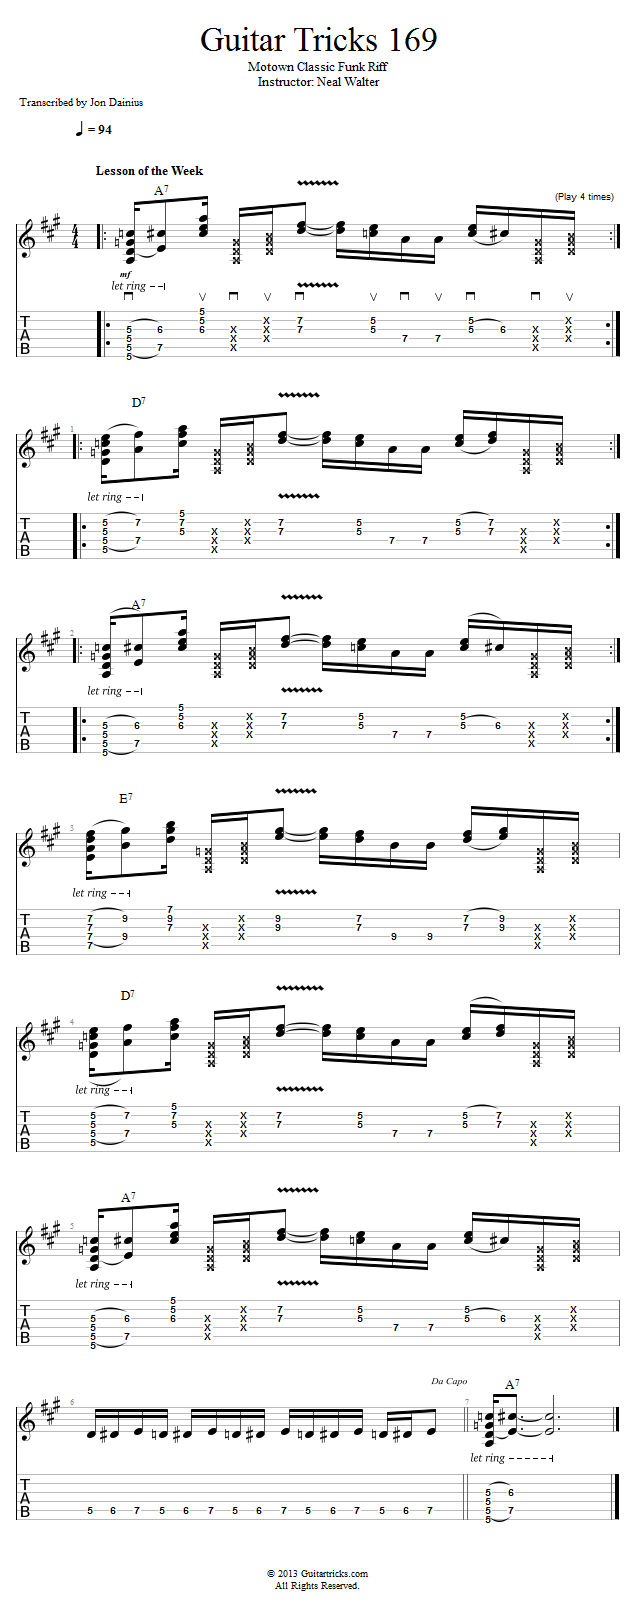 Guitar Tricks 169: Motown Classic Funk Riff  song notation